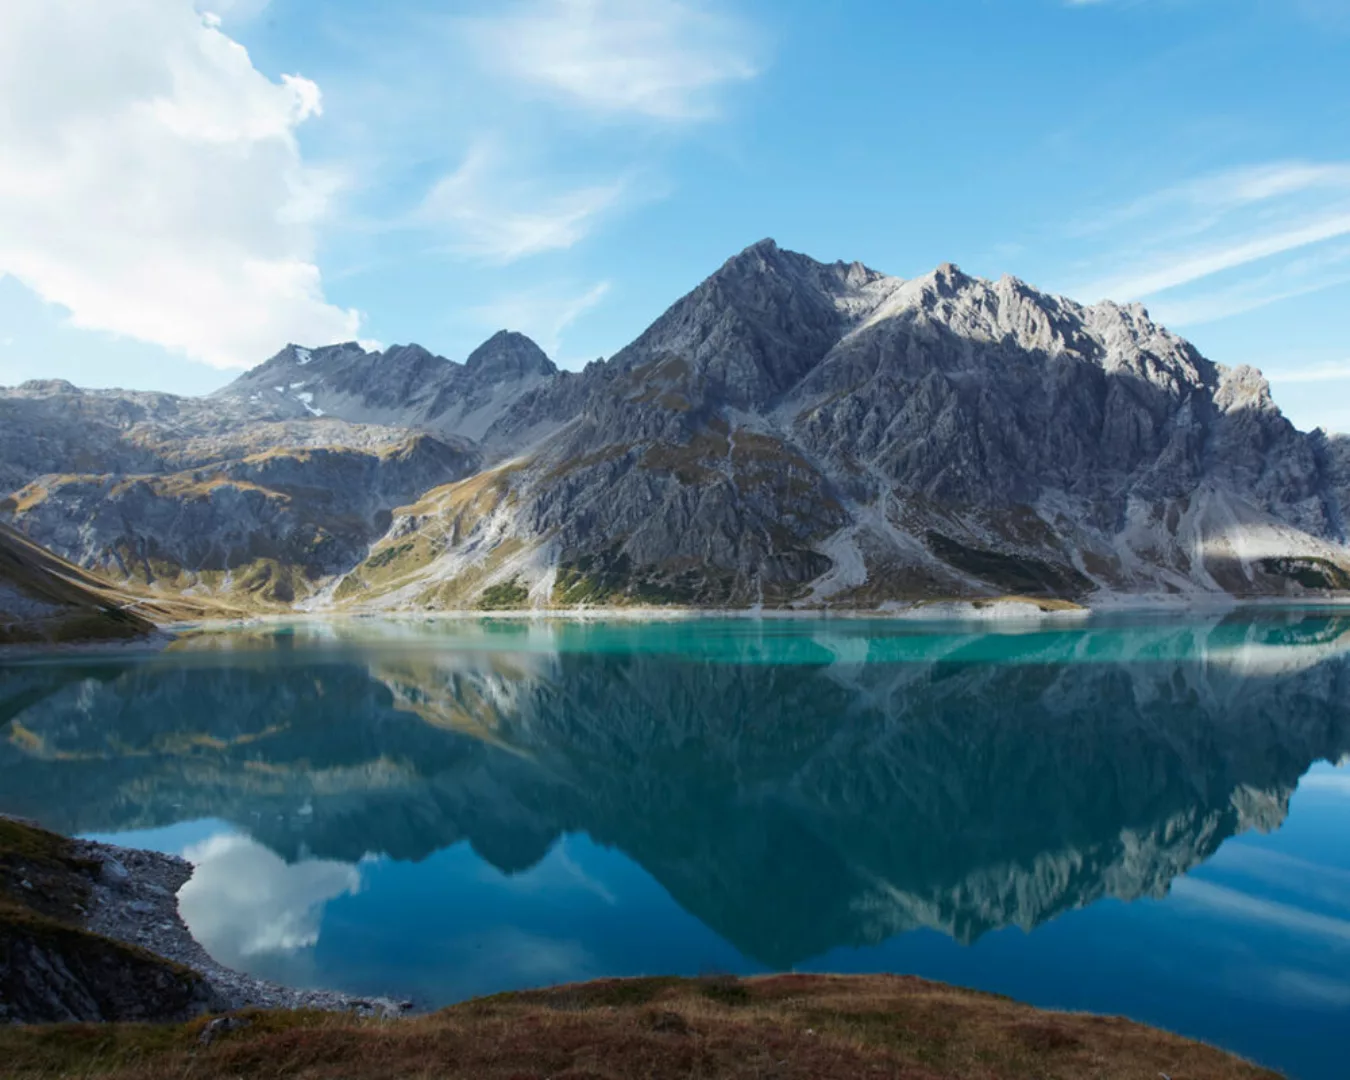 Fototapete "Bergsee klar" 4,00x2,50 m / Glattvlies Perlmutt günstig online kaufen